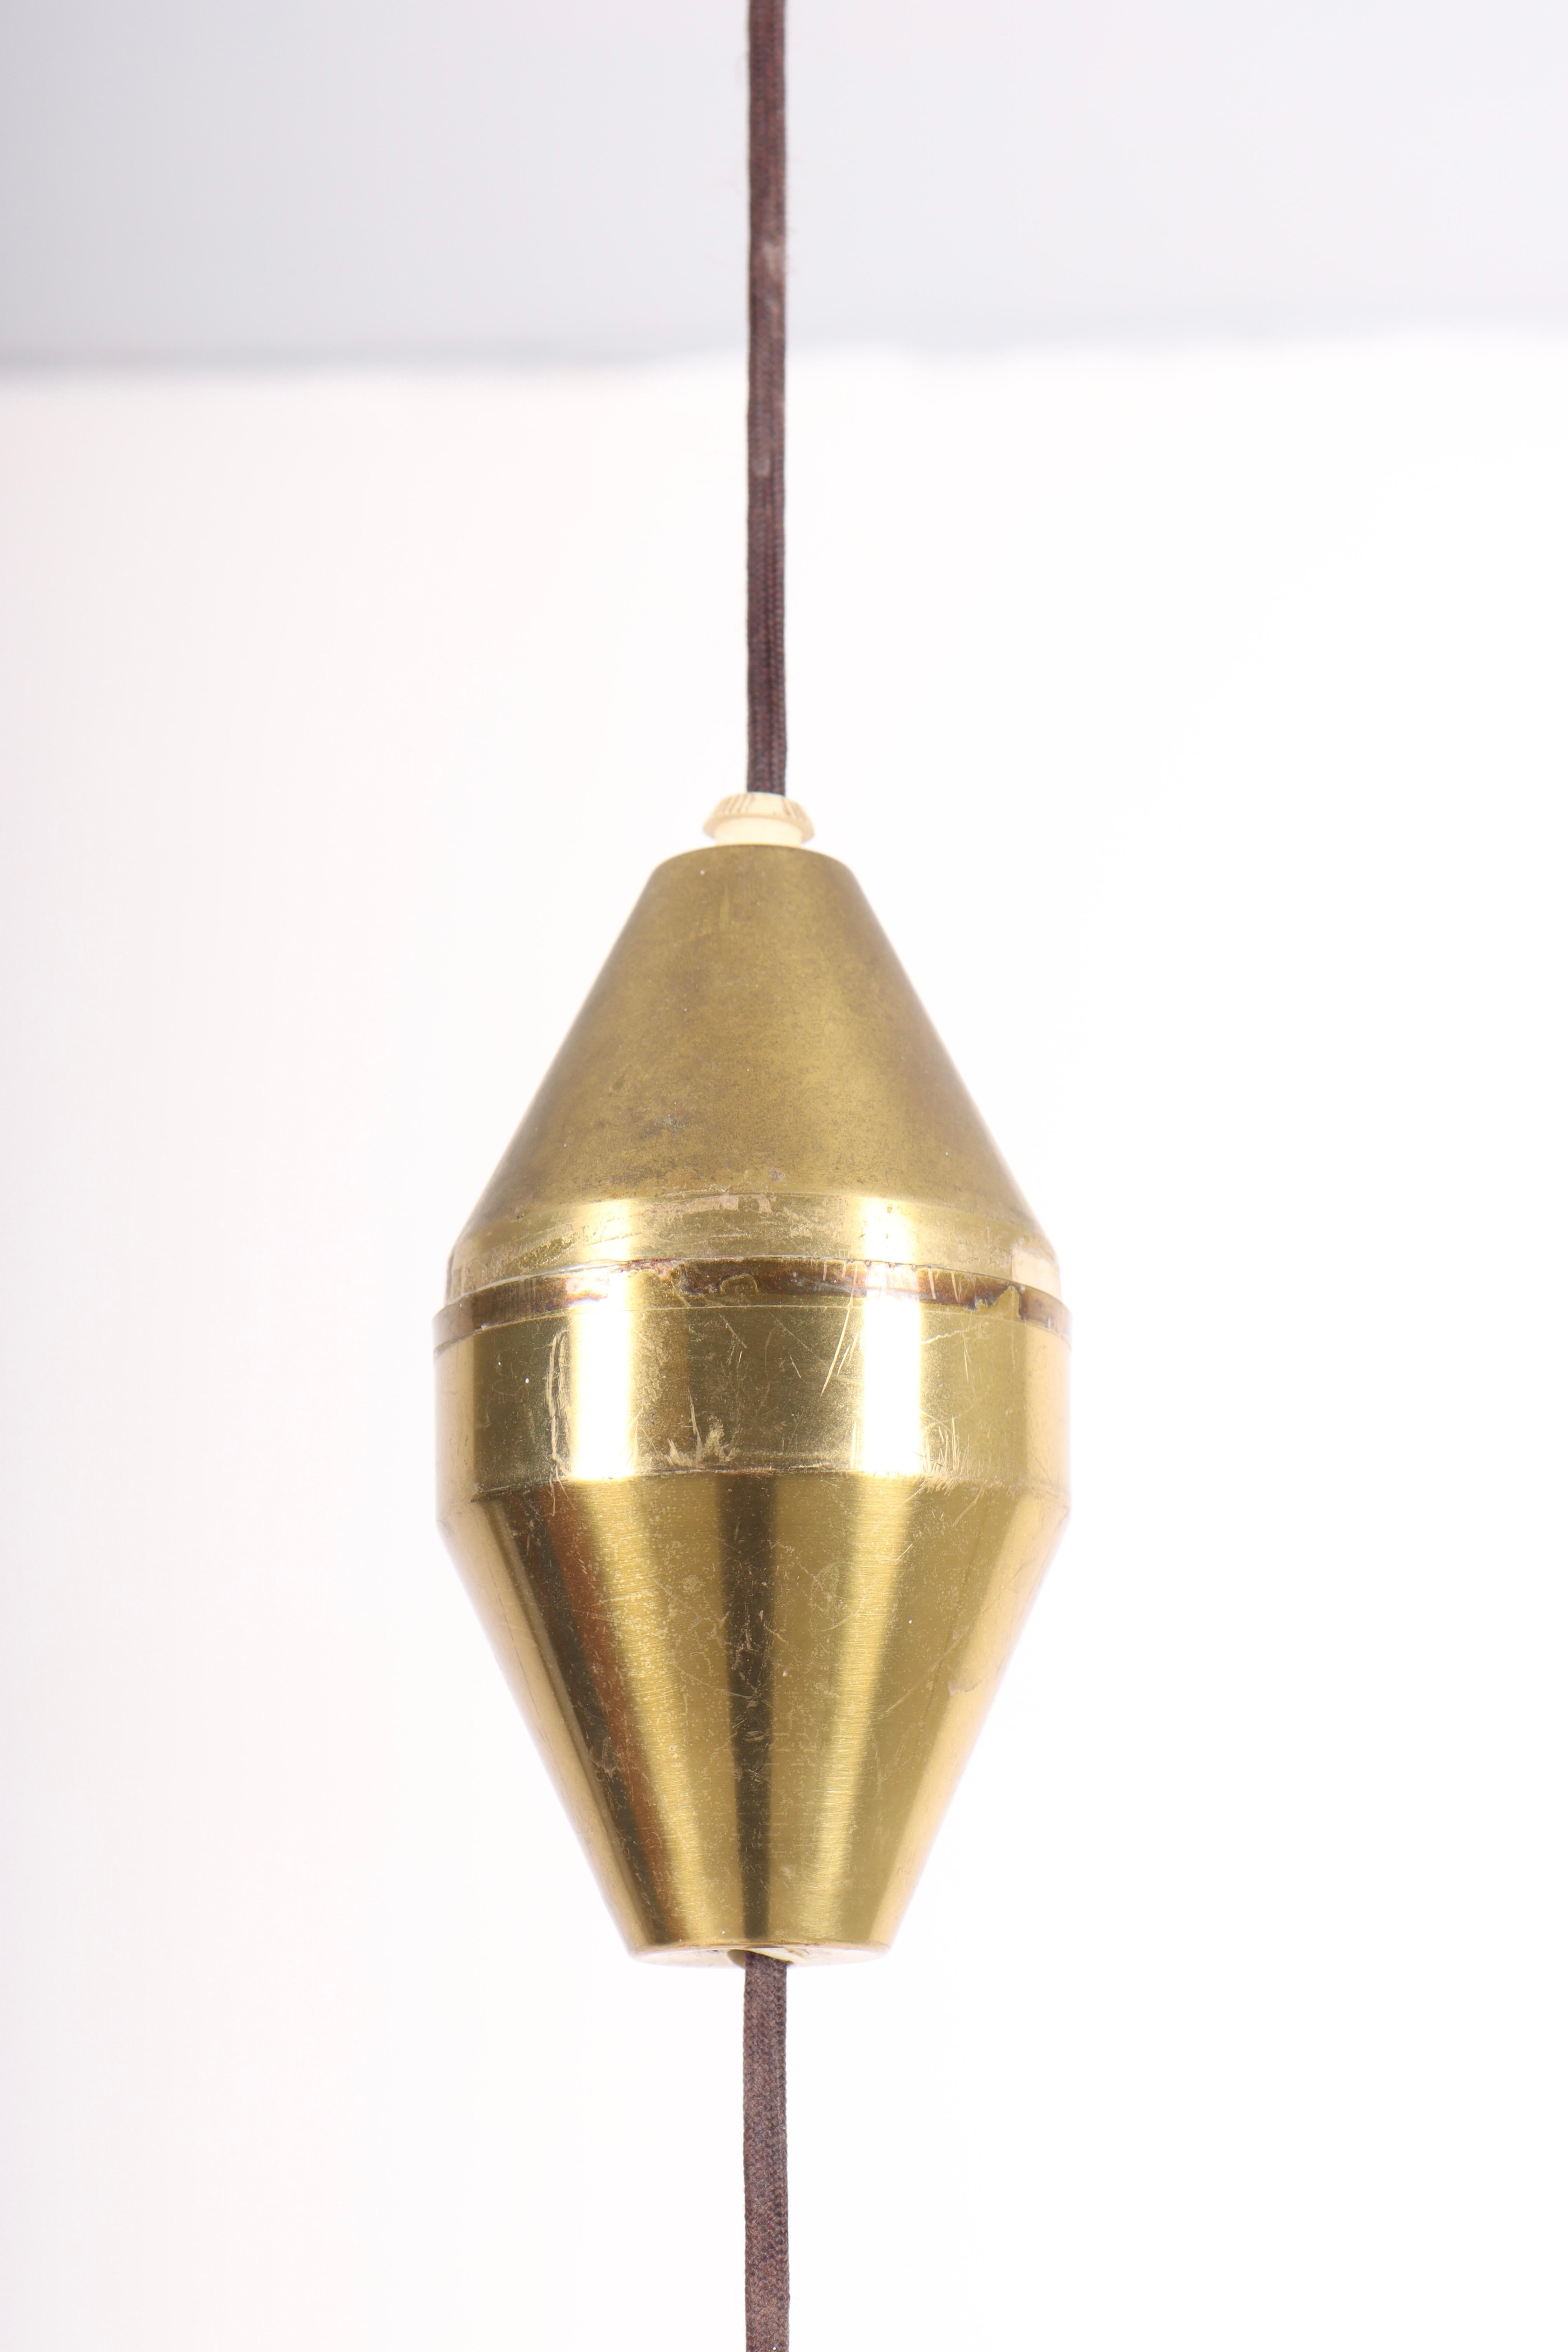 Scandinavian Modern Midcentury Pendant in Brass by Frits Schlegel, Danish Design, 1960s For Sale